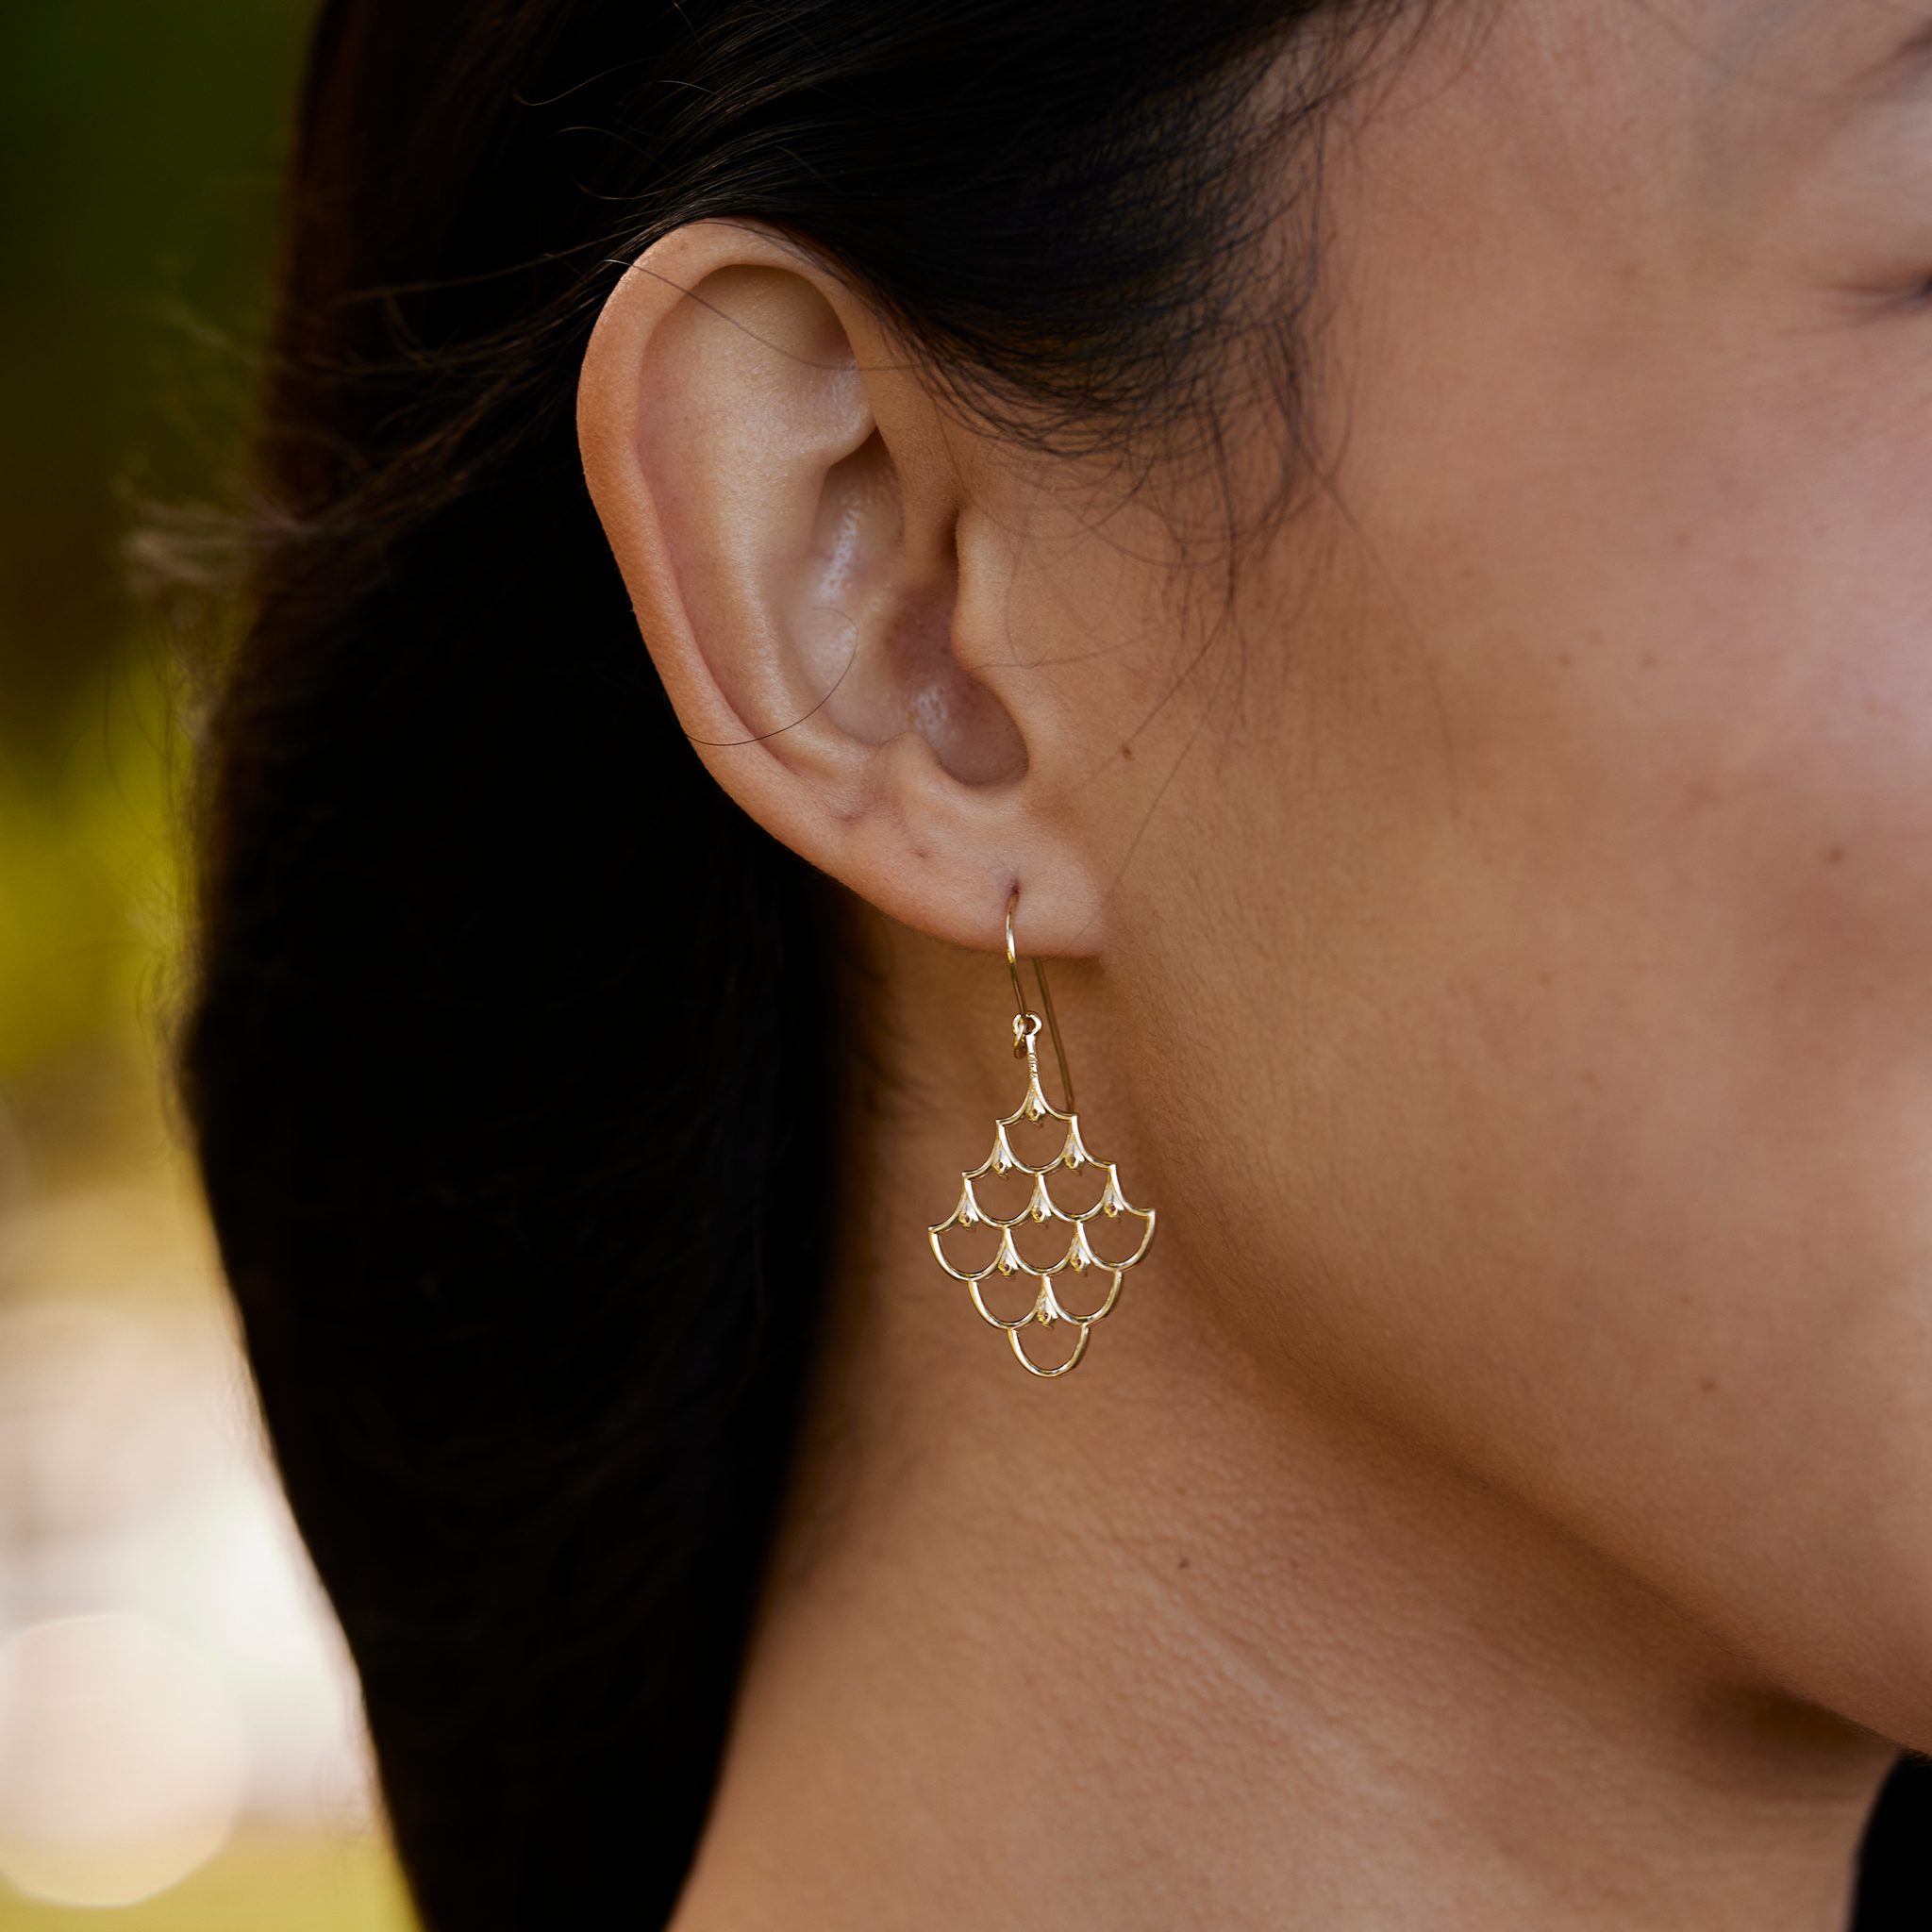 Mermaid Scales Earrings in Gold with Diamonds - 25mm